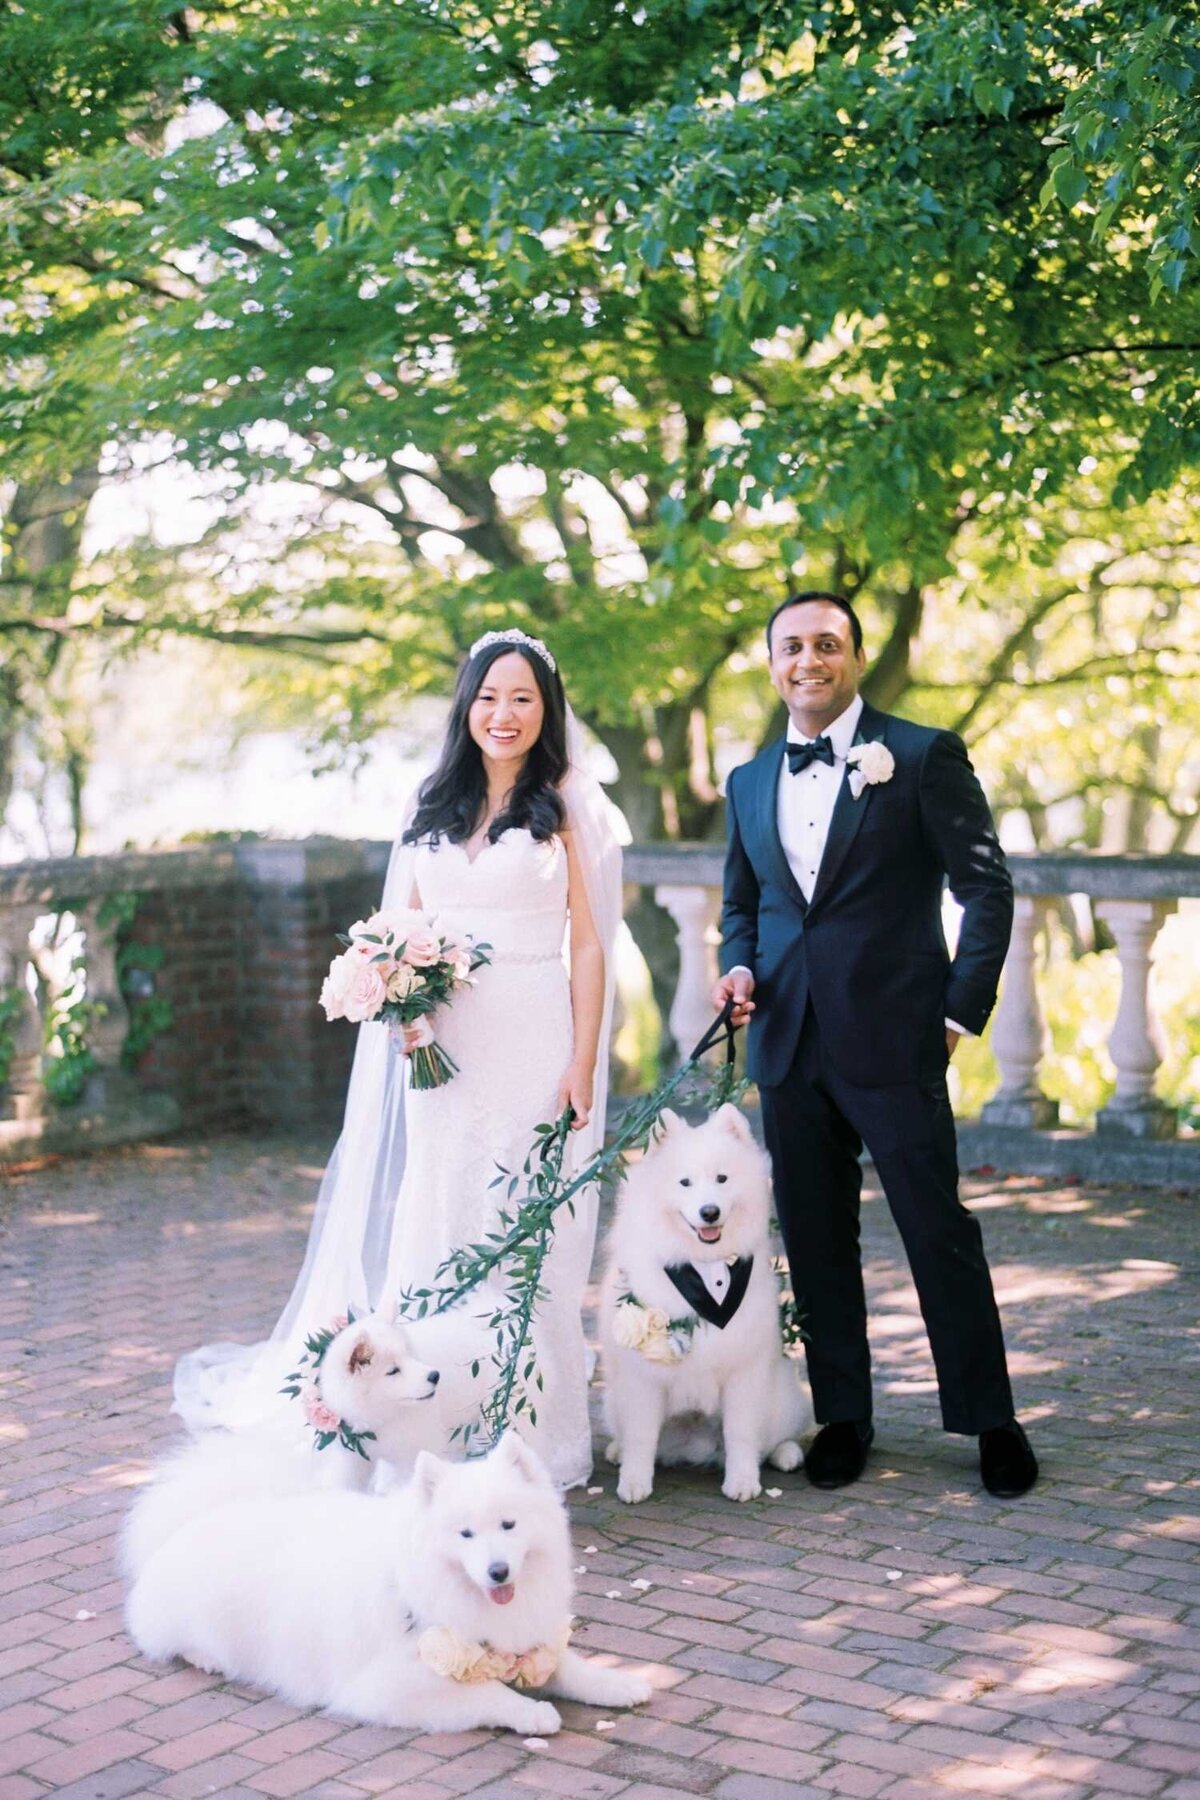 Bride and Groom Portrait with Dogs at Luxury Chicago North Shore Garden Wedding Venue